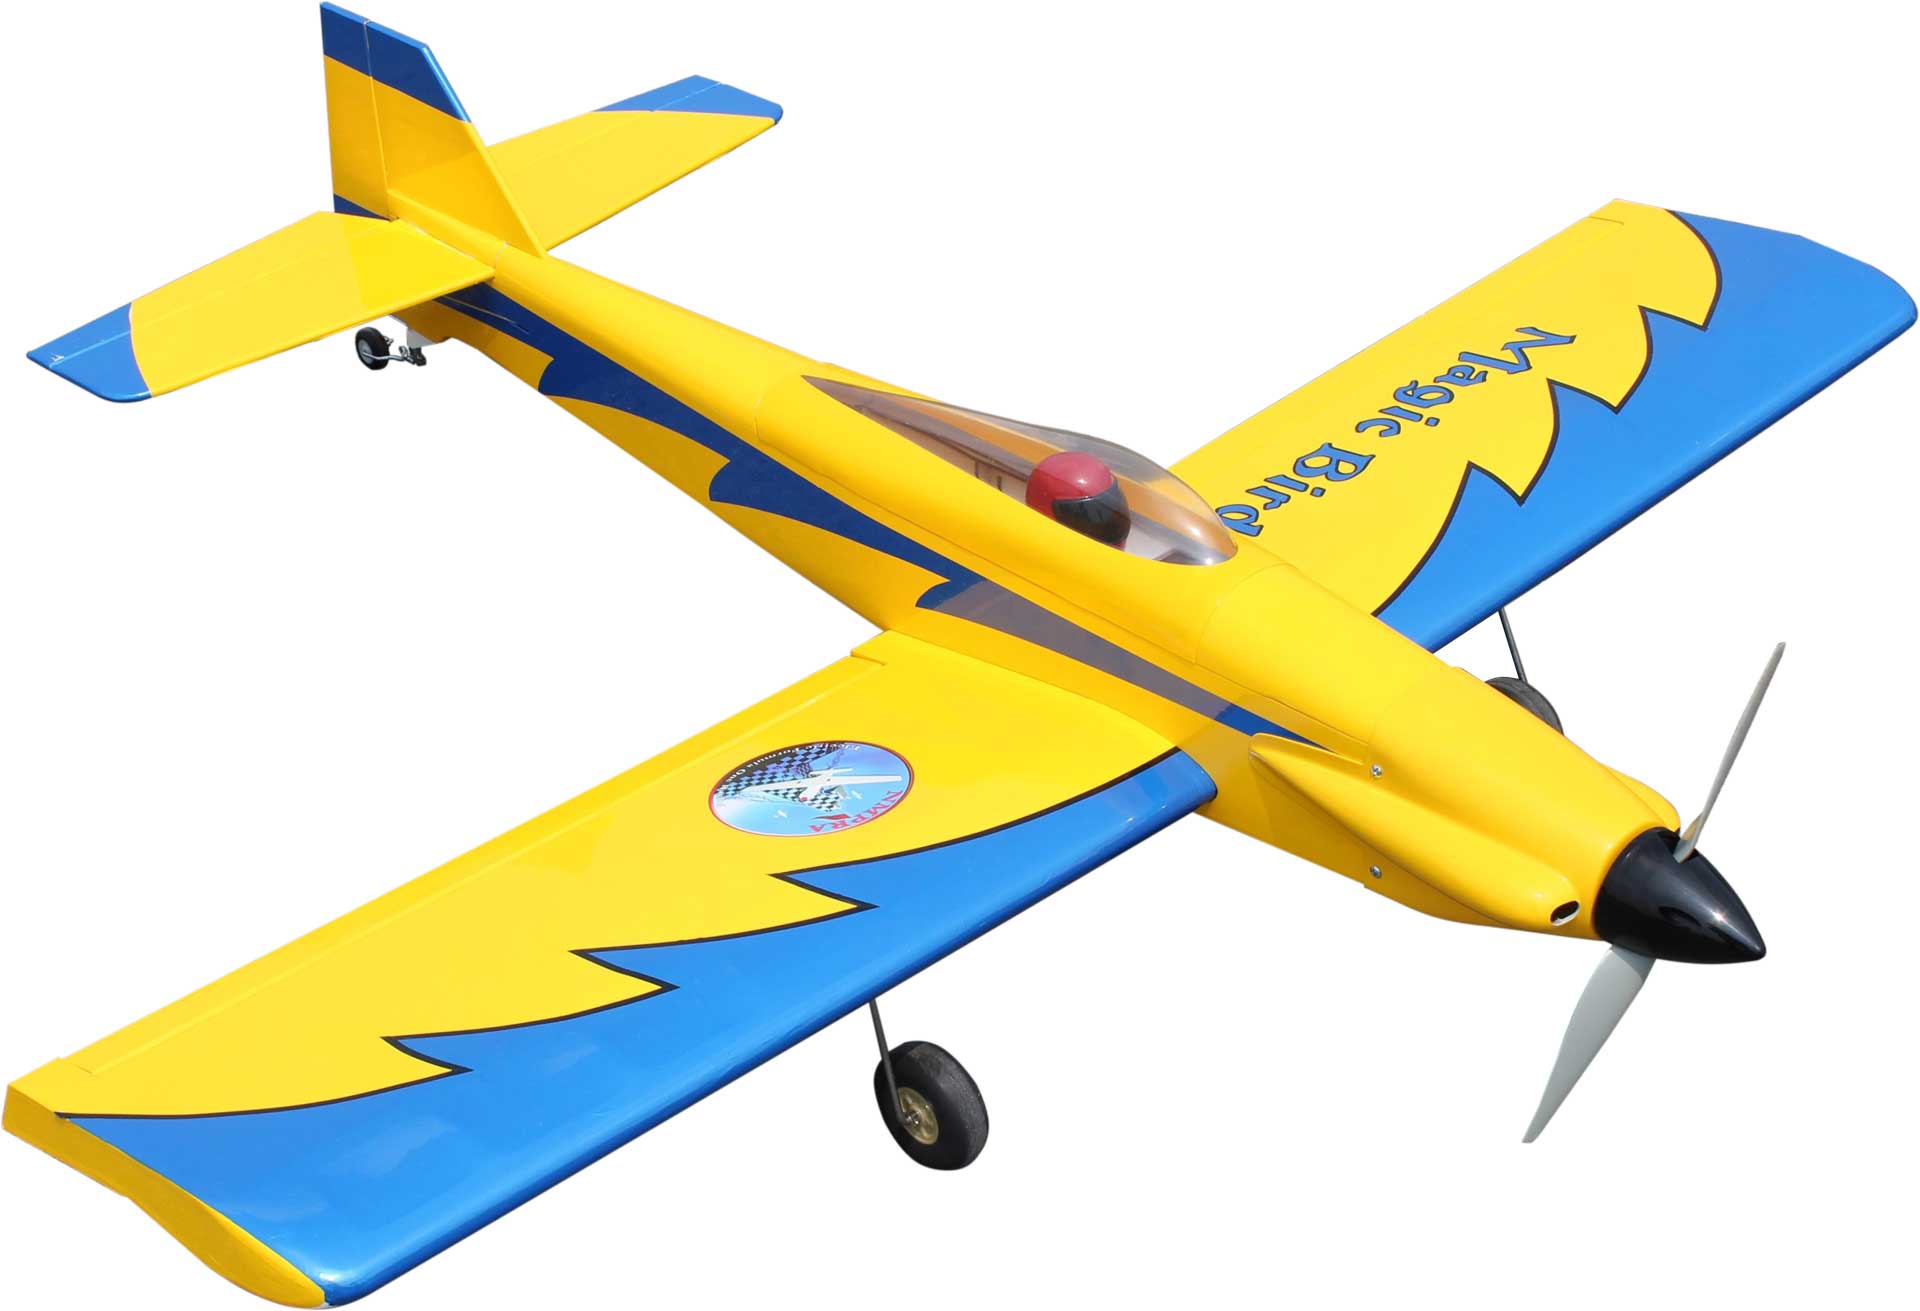 Seagull Models ( SG-Models ) Magic Bird 40e 46" PNP Pylon Racing ARF model, with Dualsky drive, yellow/blue